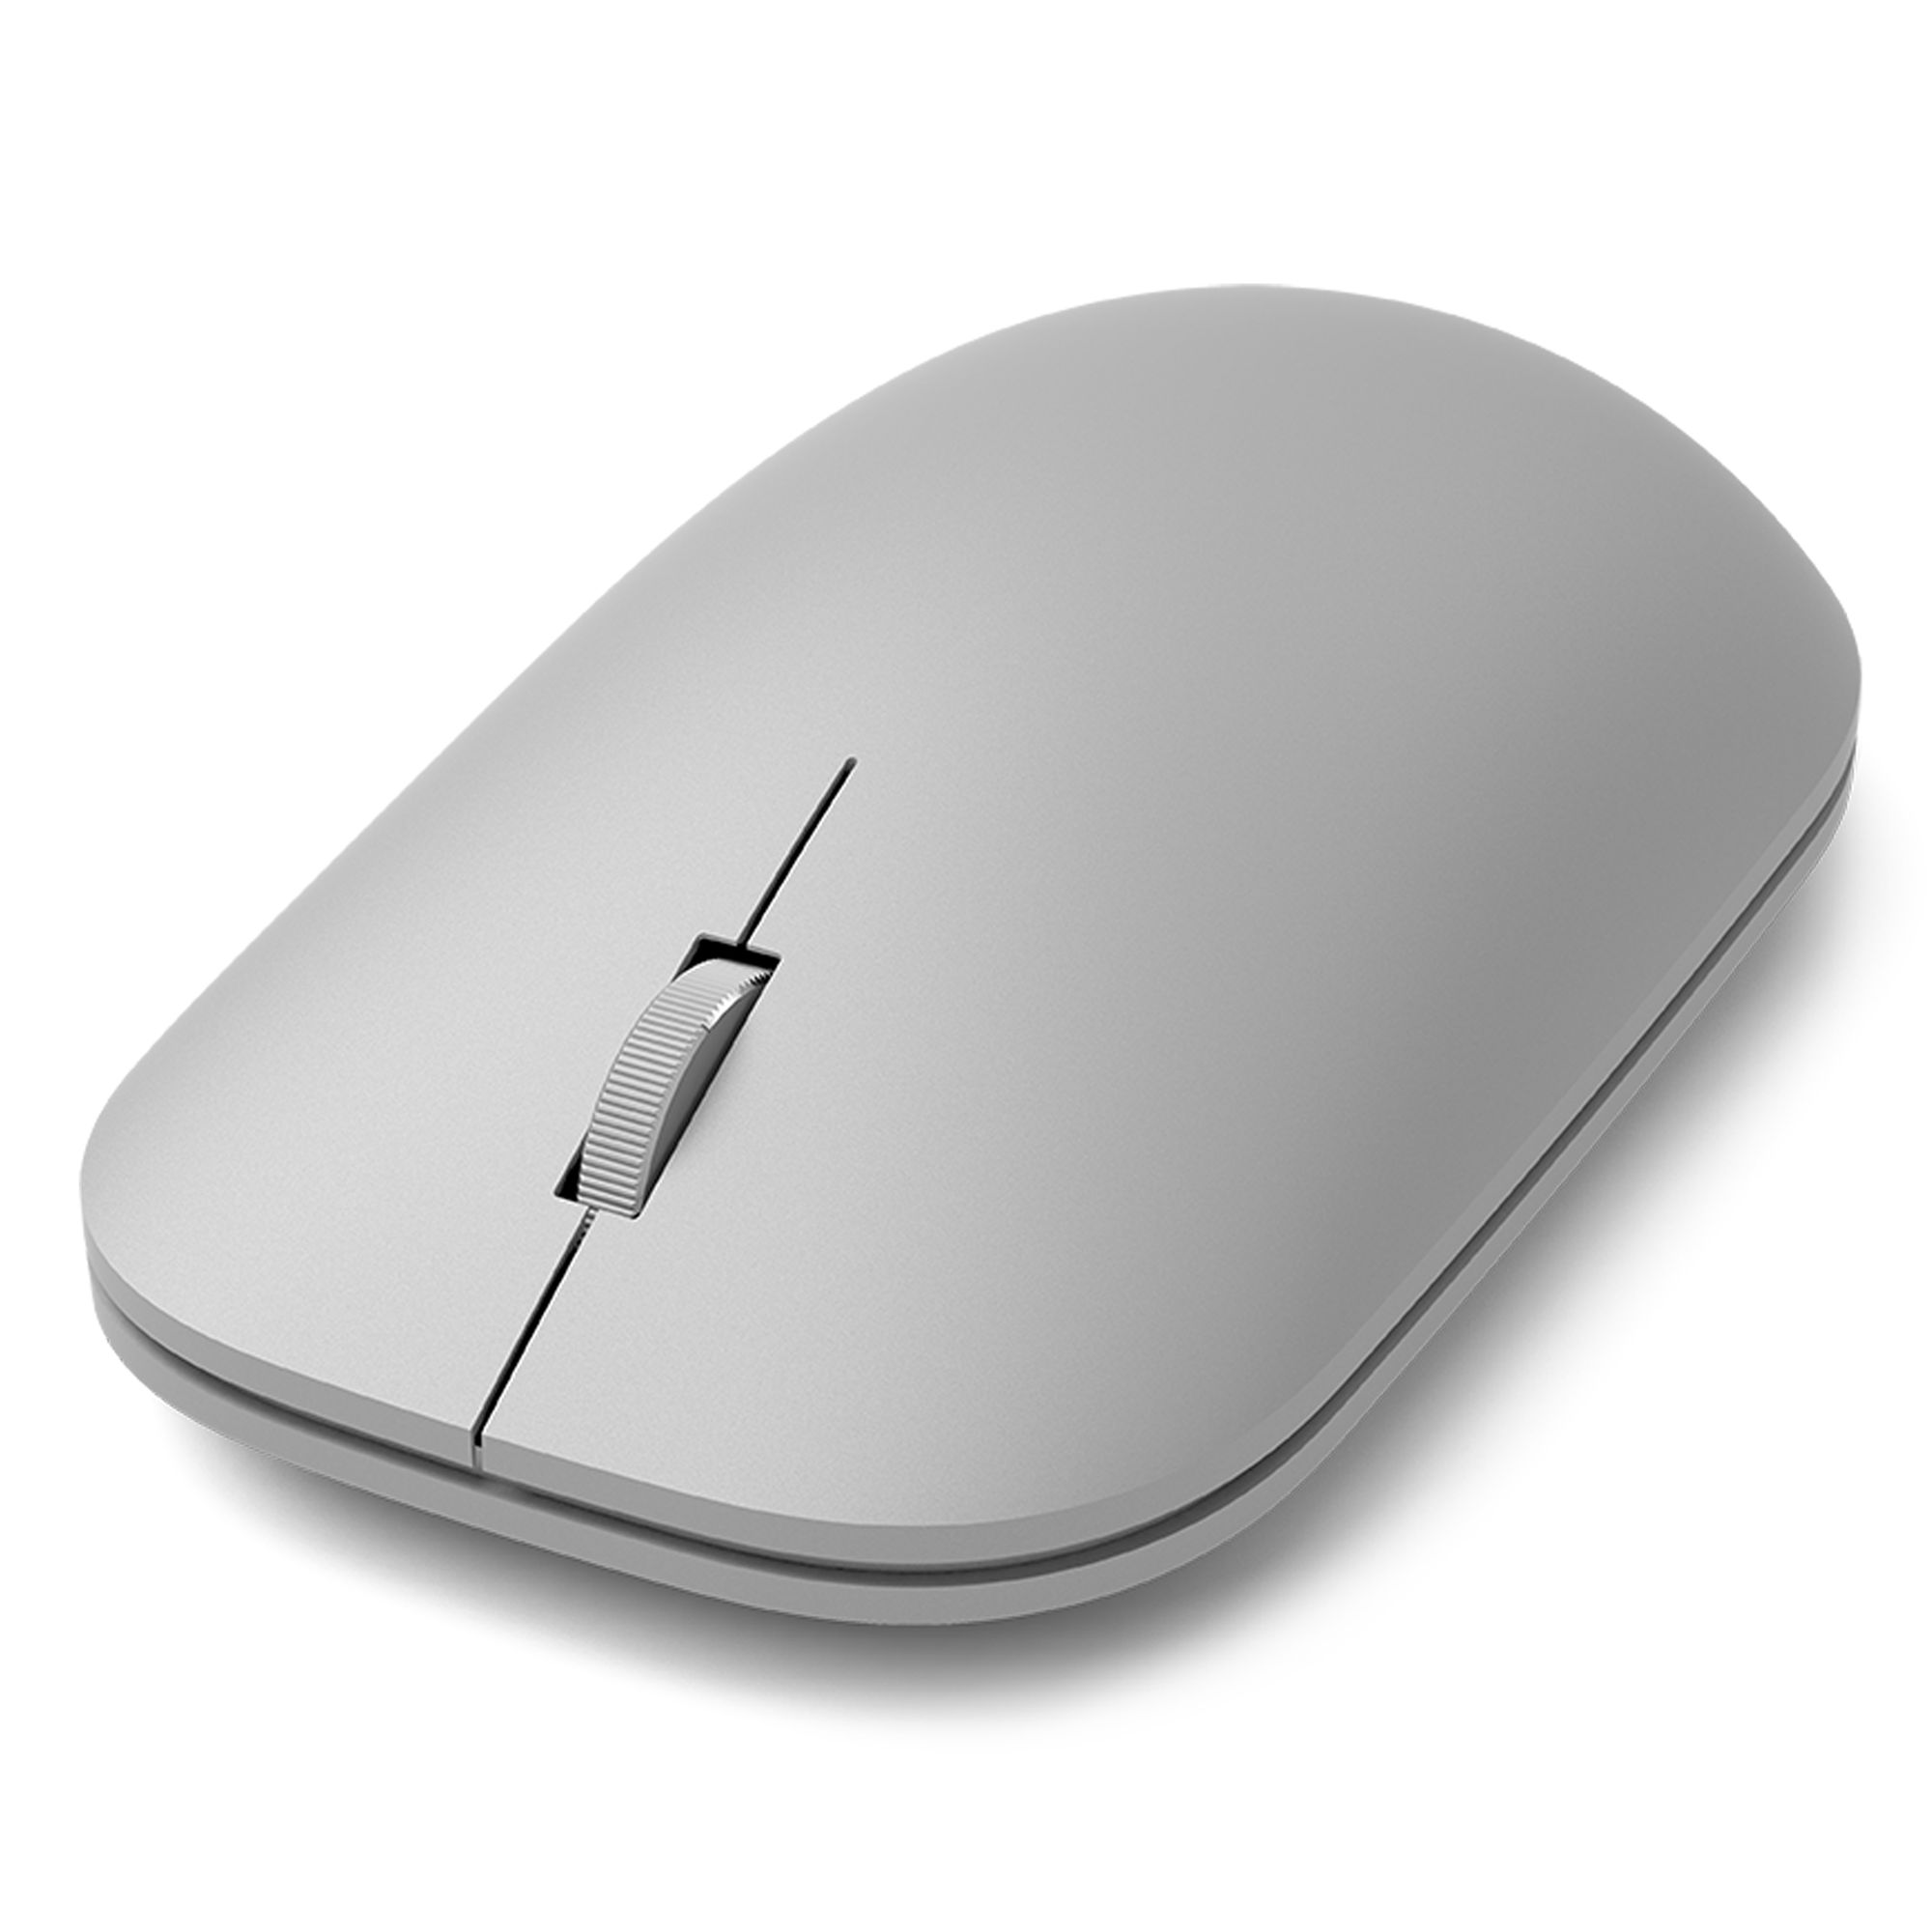 Surface mouse. Мышка Winstar WS-MS-901. Мышь Microsoft проводная с тачпадом. Mouse Winstar WS-MS-901 USB. Microsoft Design Mouse и Modern mobile.